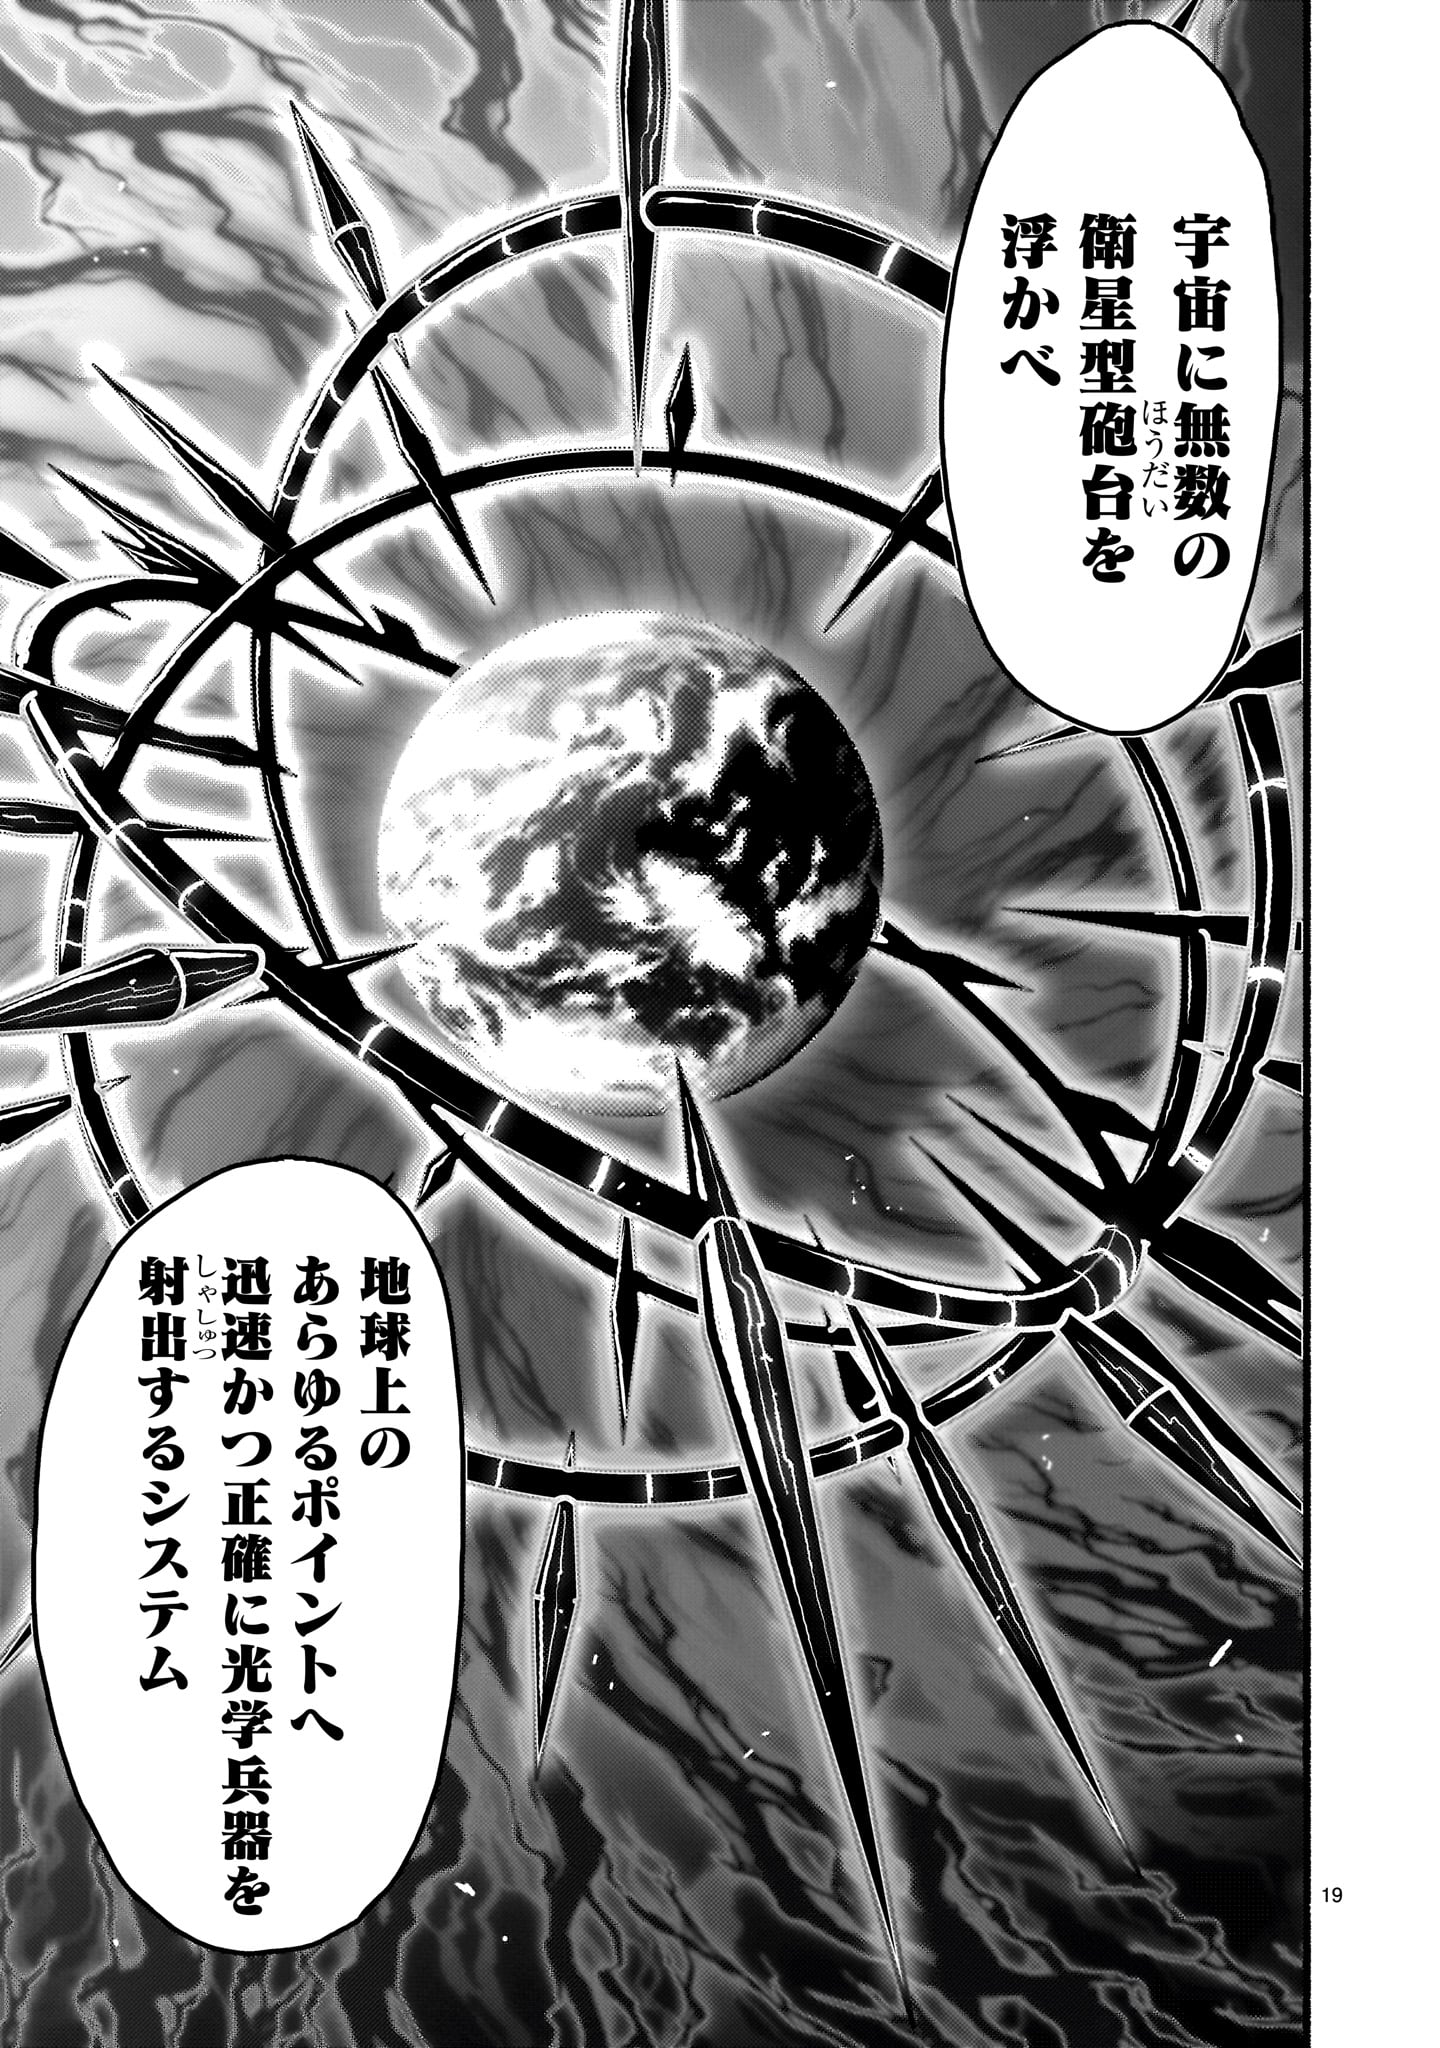 Kaminaki Sekai no Kamisama Katsudou - Chapter 51 - Page 19